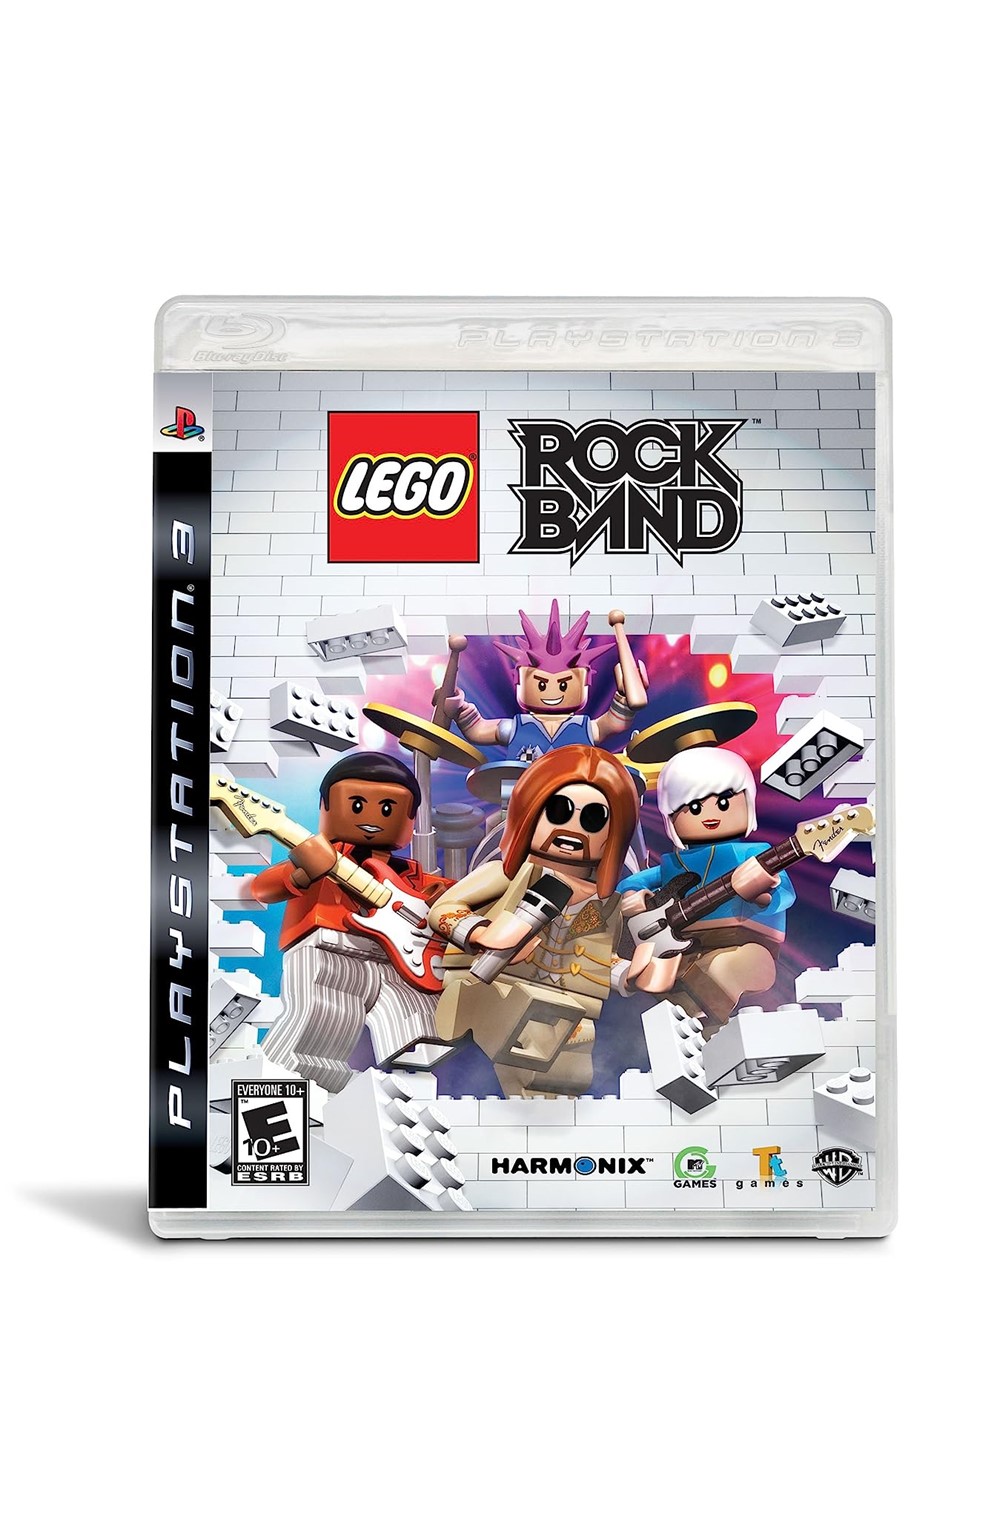 Playstation 3 Ps3 Lego Rock Band